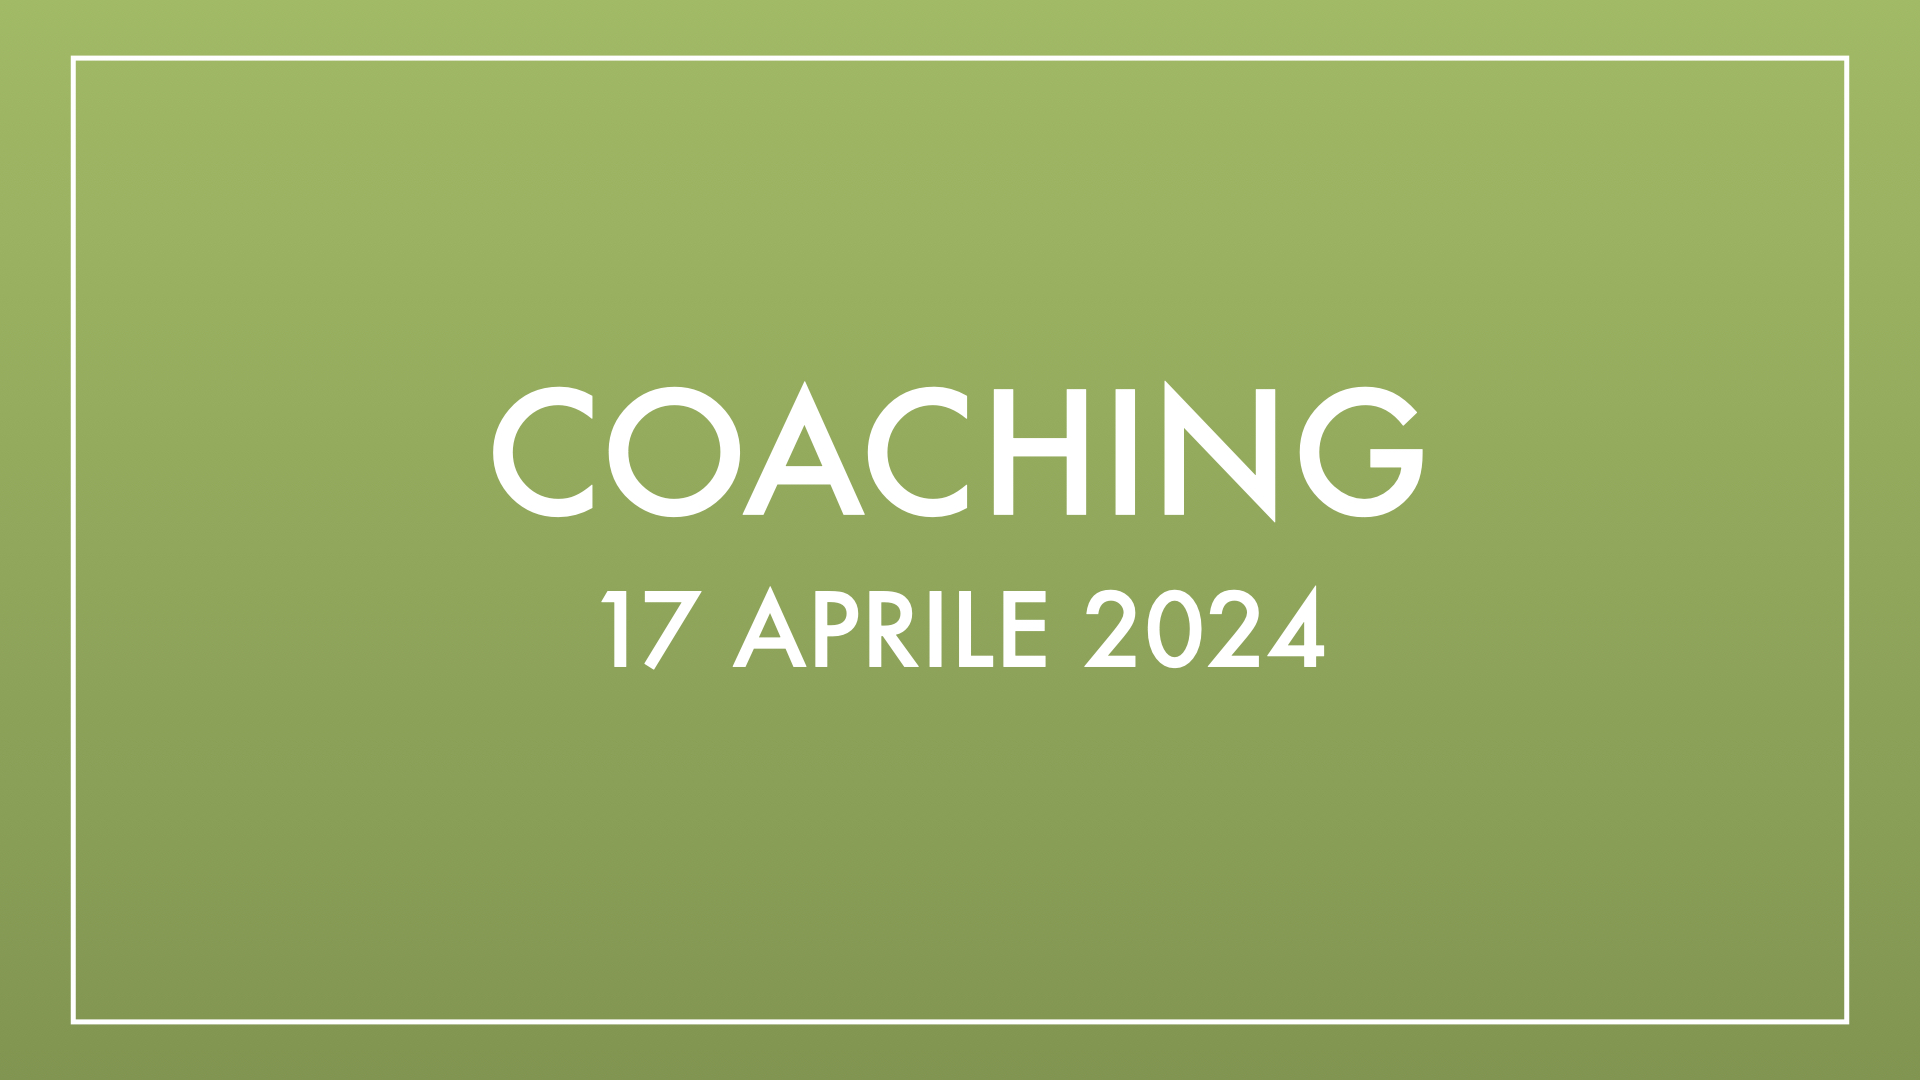 Coaching 17 aprile 2024